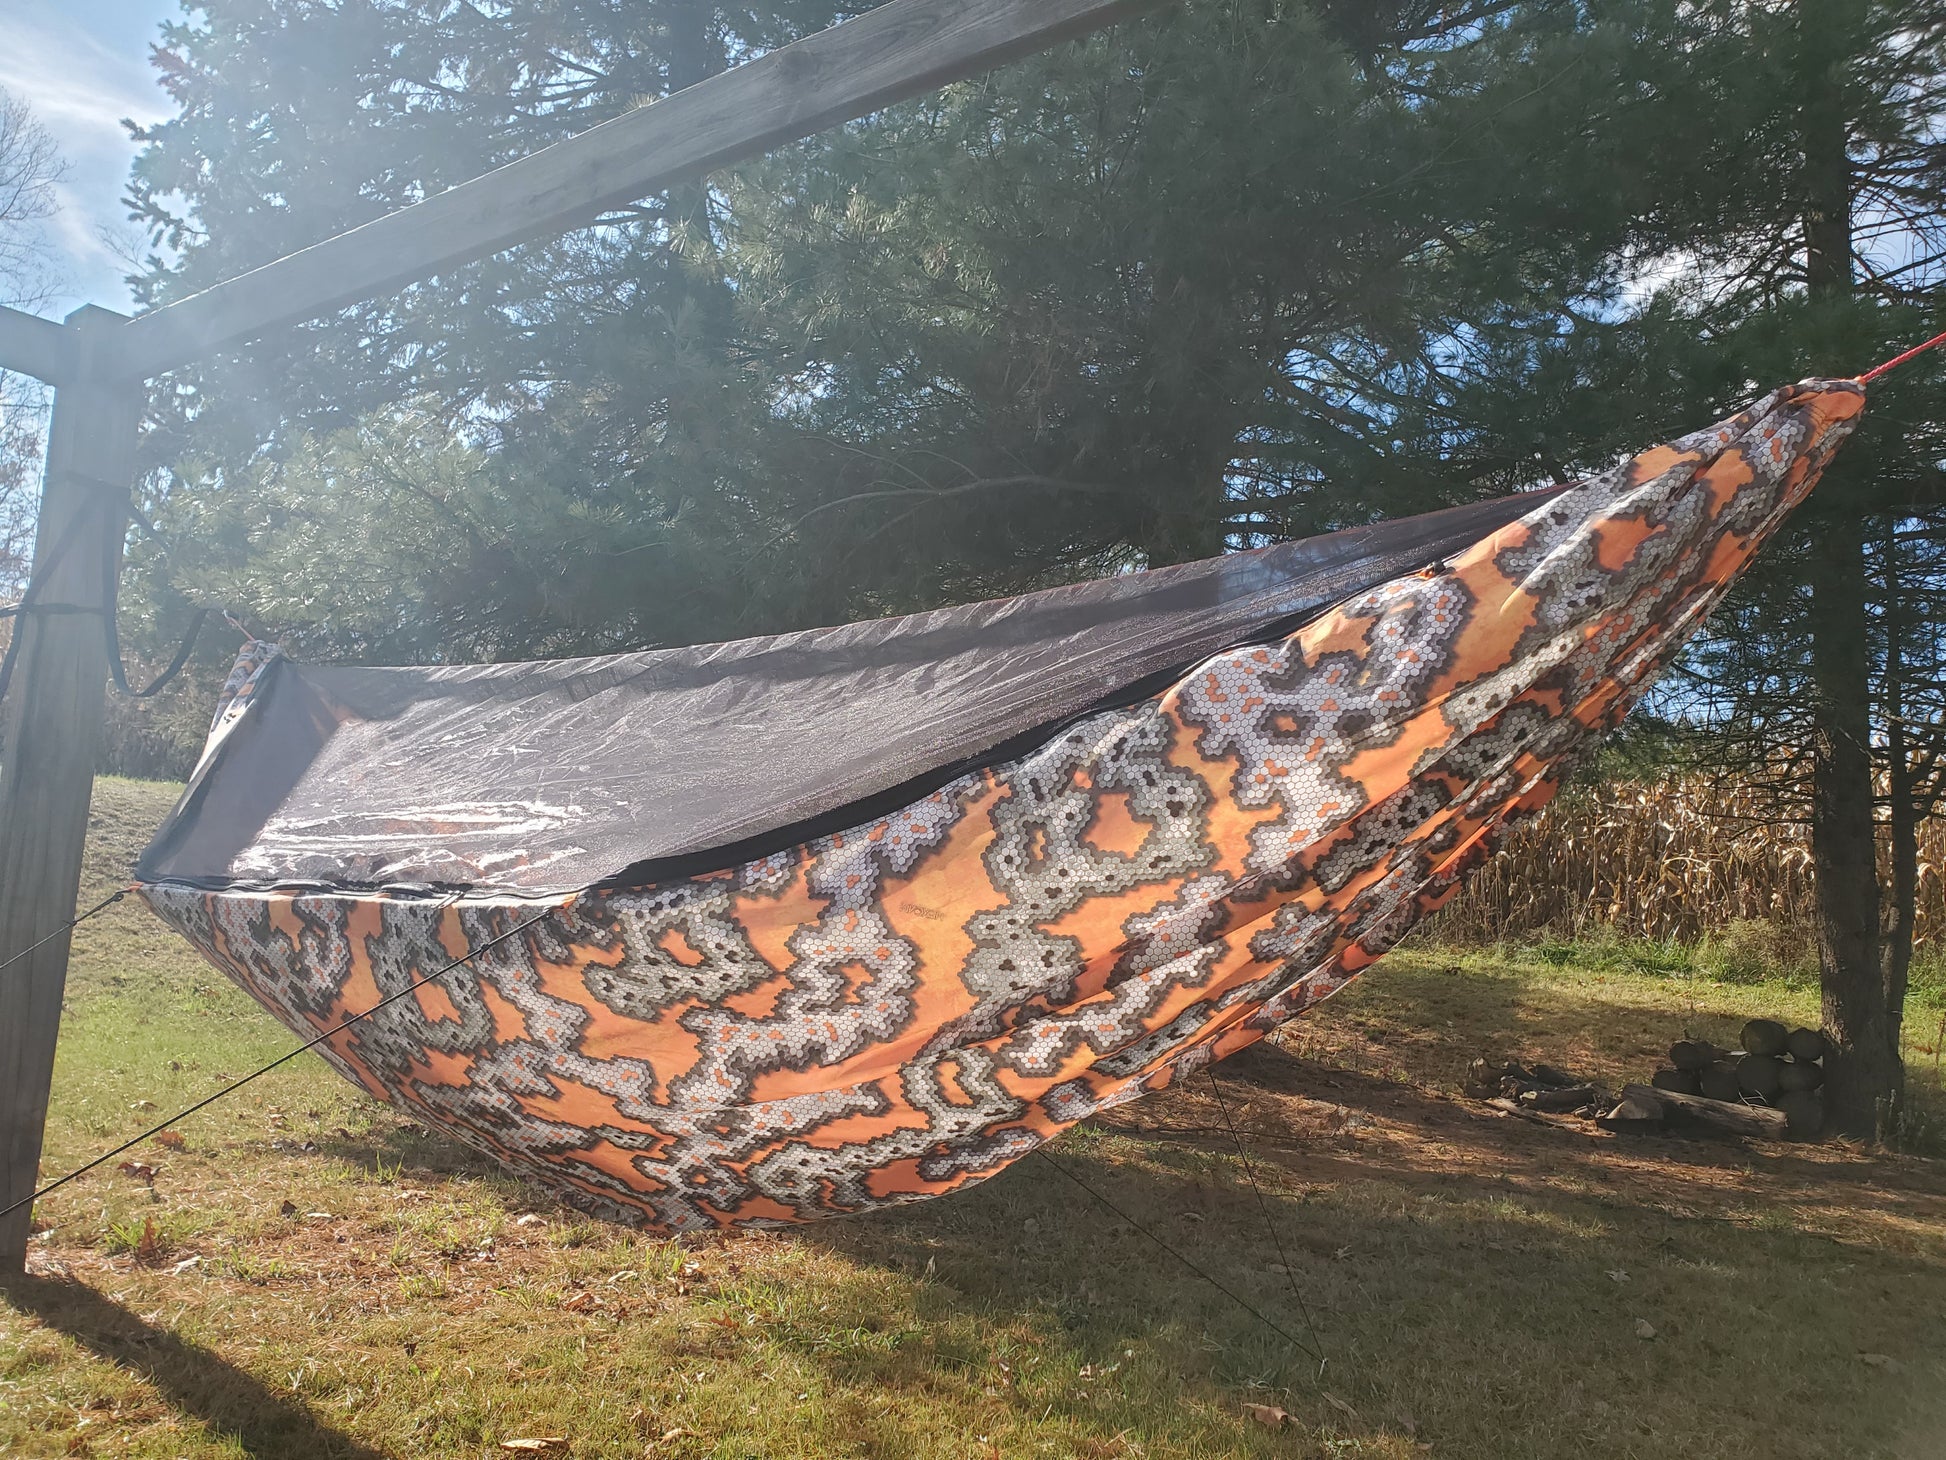 ultralight orange hexcam camo camping hammock Adirondack custom made dream hammock with bugnet or mosquito net